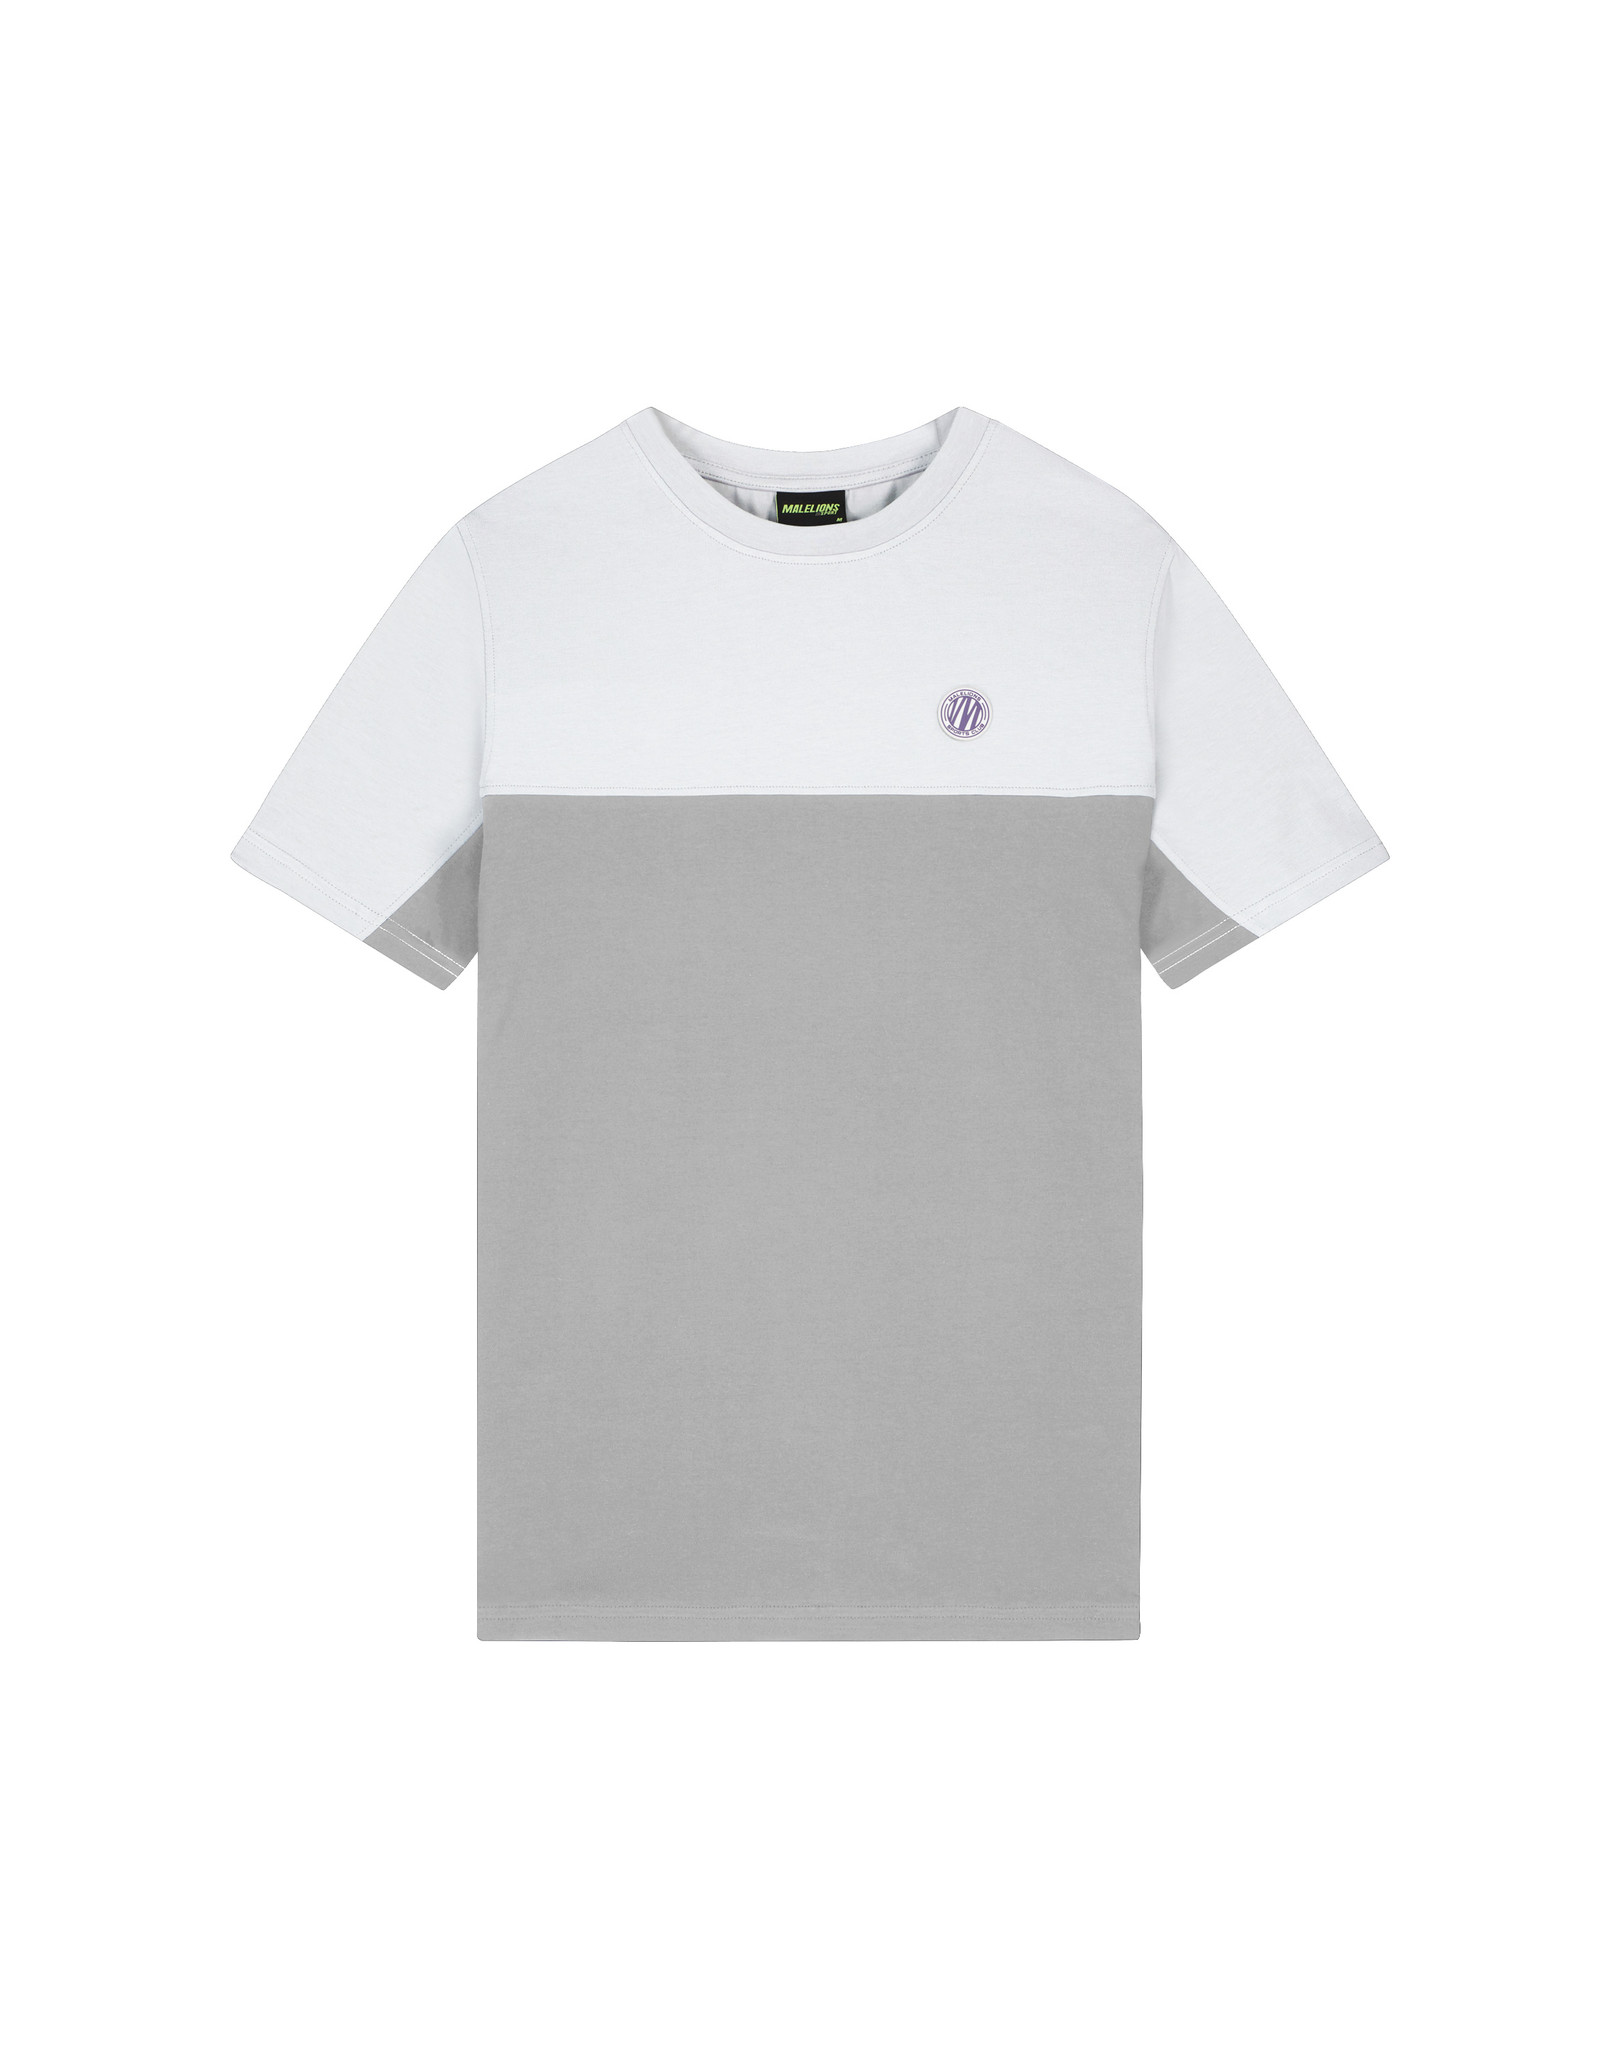 Malelions Sport Champion T-Shirt - White/Grey